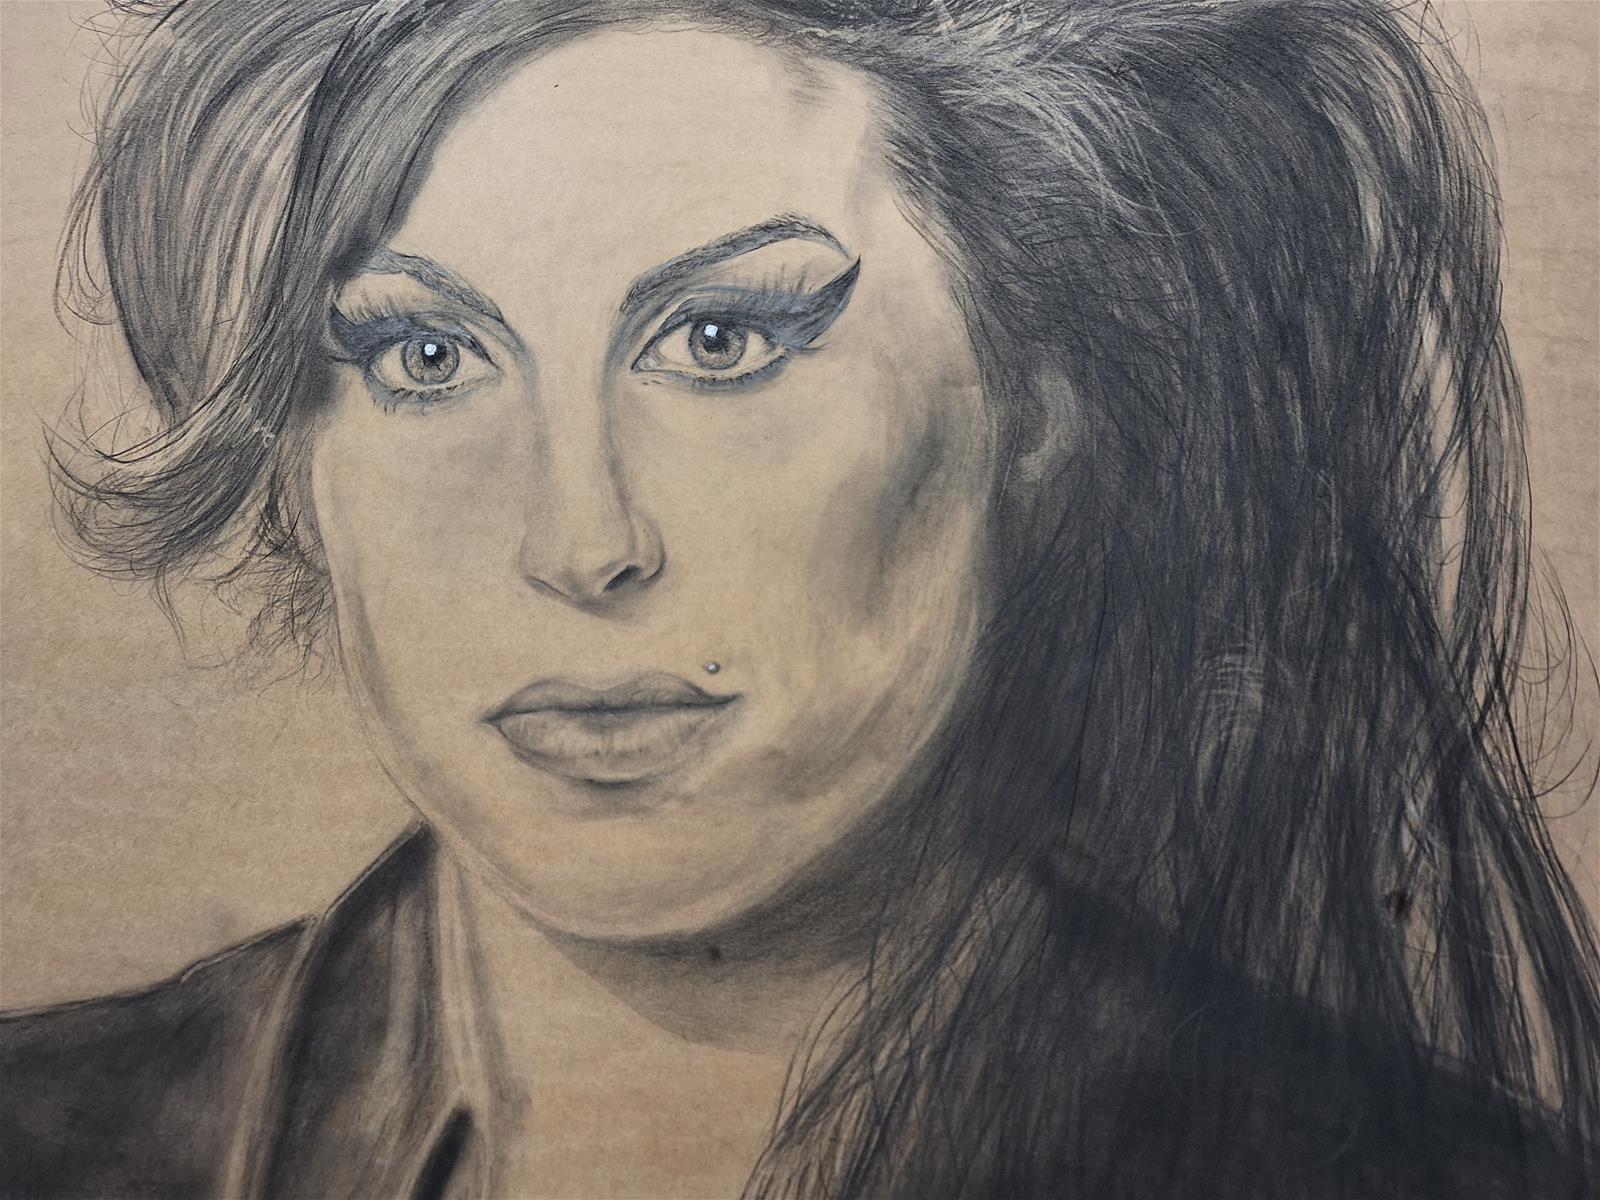 Piirros Amy Winehousesta